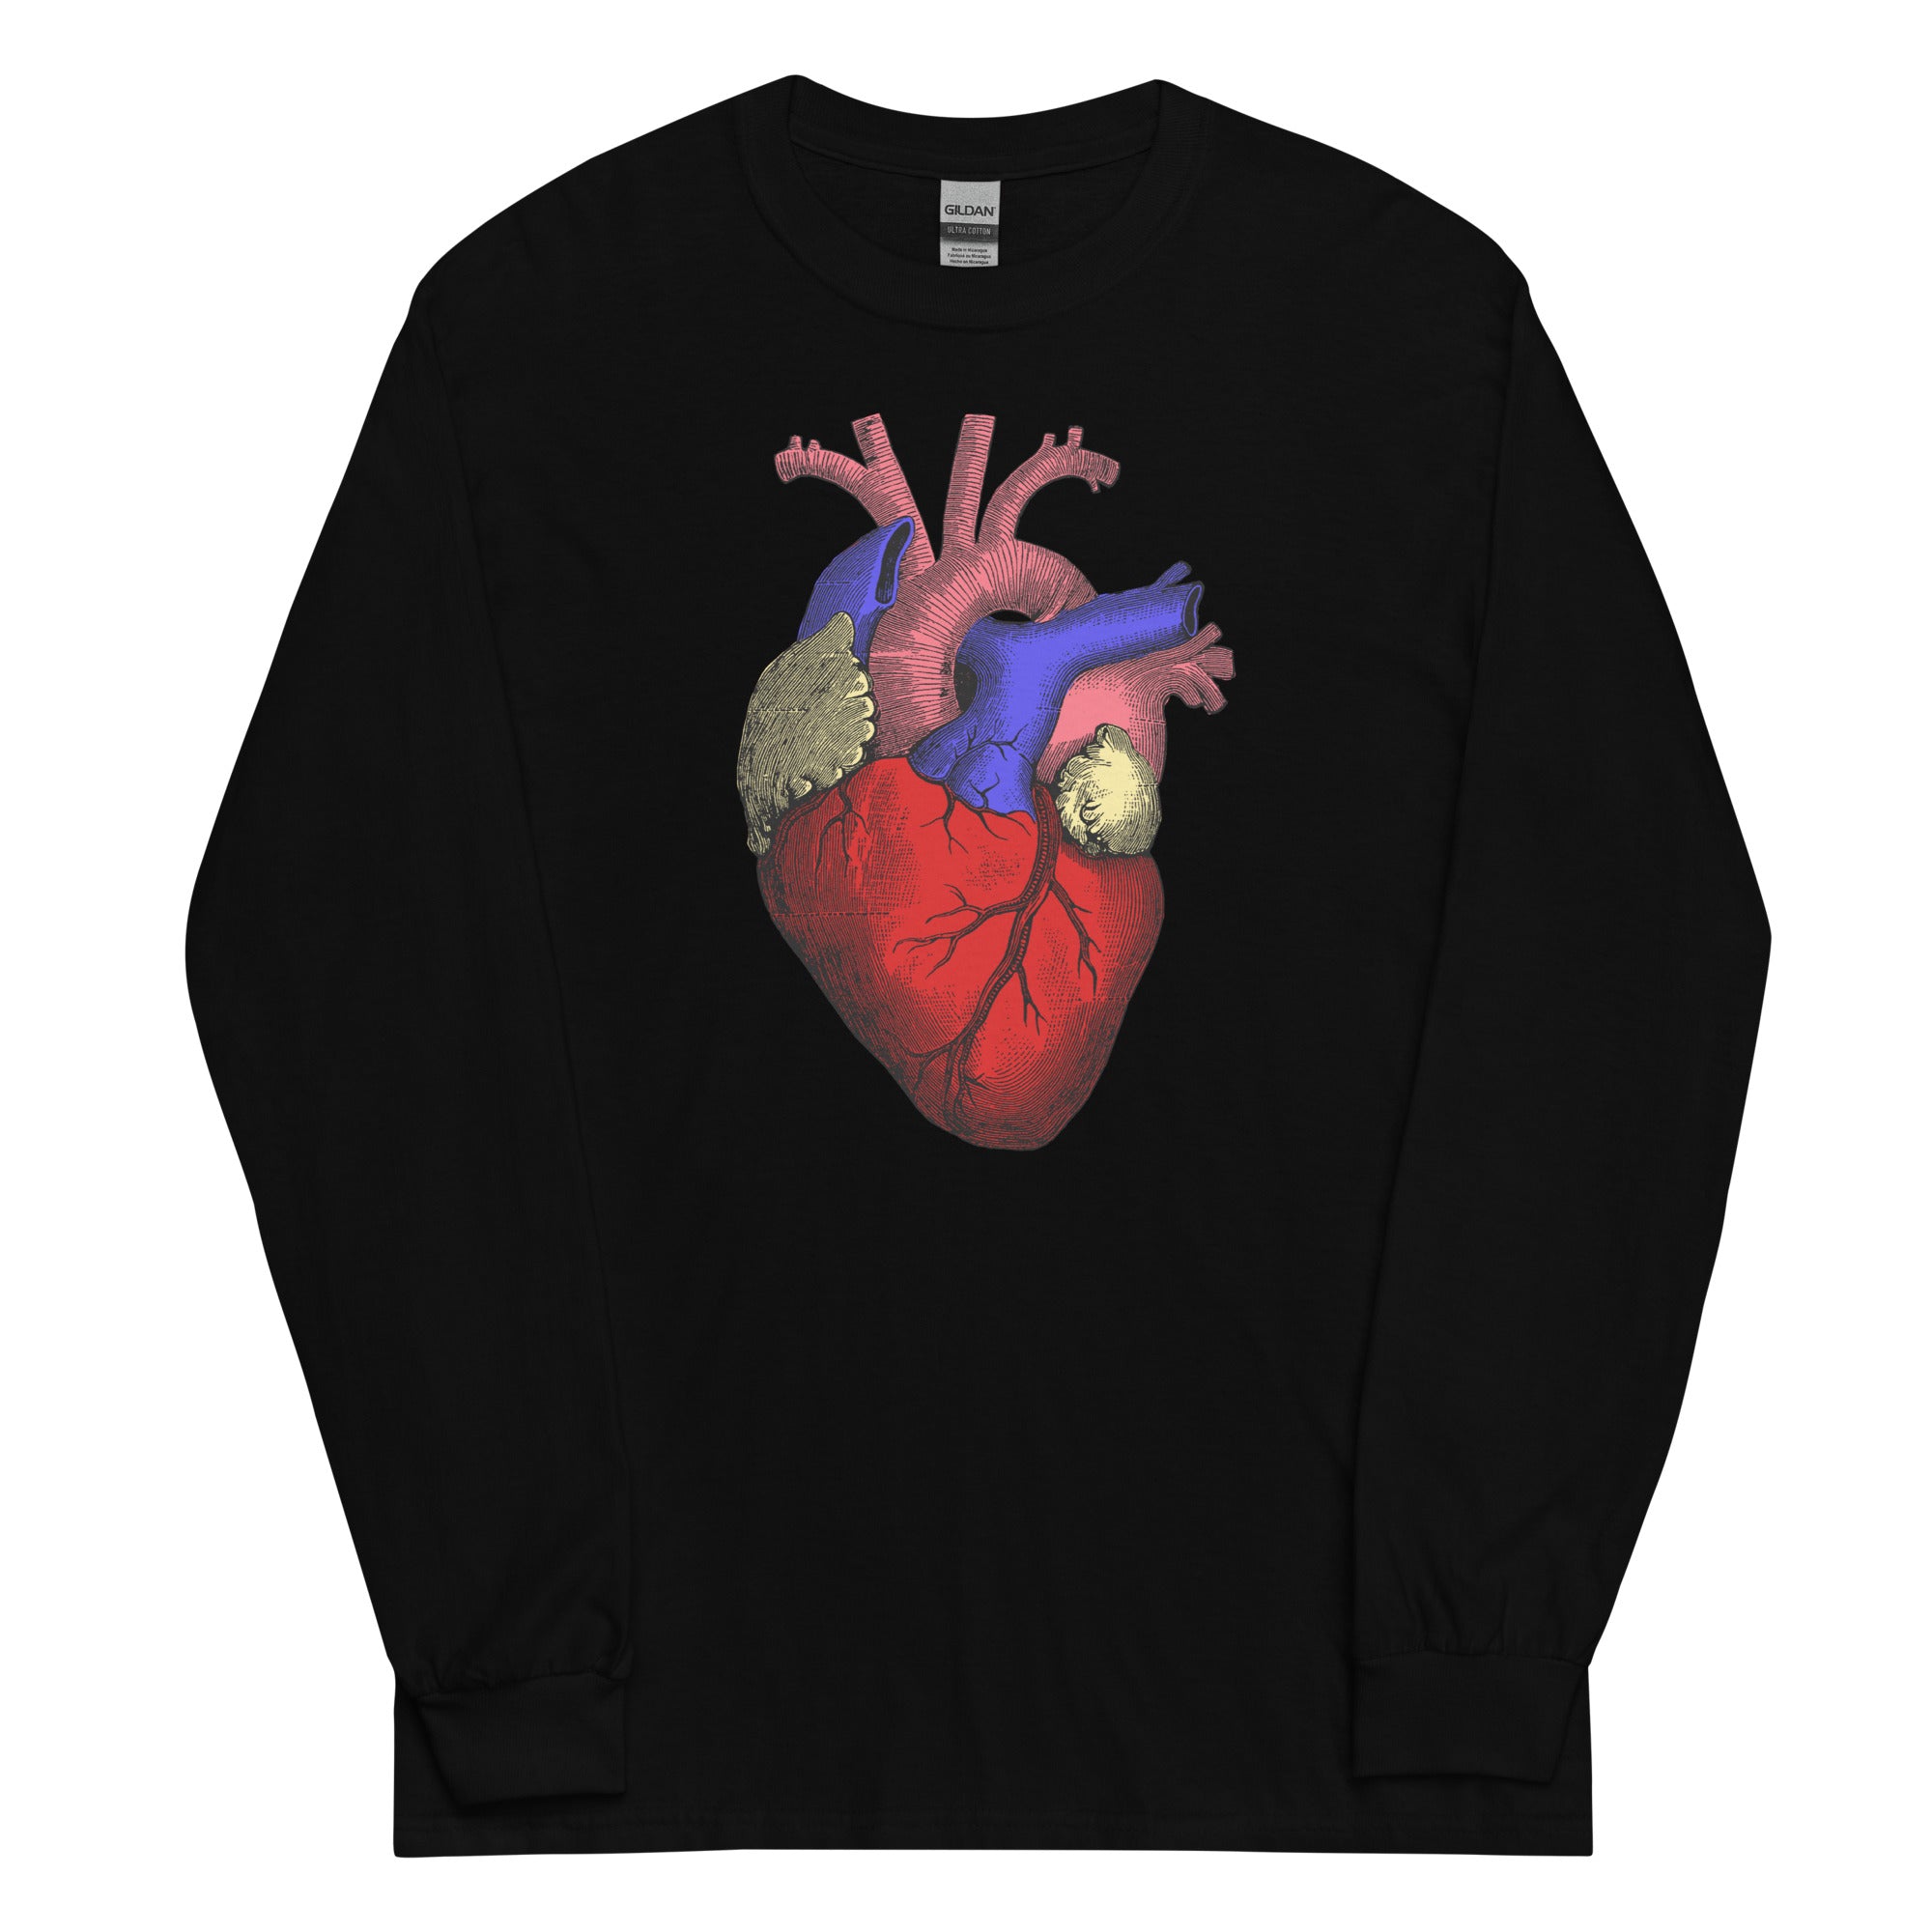 Anatomical Human Heart Medical Art Long Sleeve Shirt Full Color - Edge of Life Designs